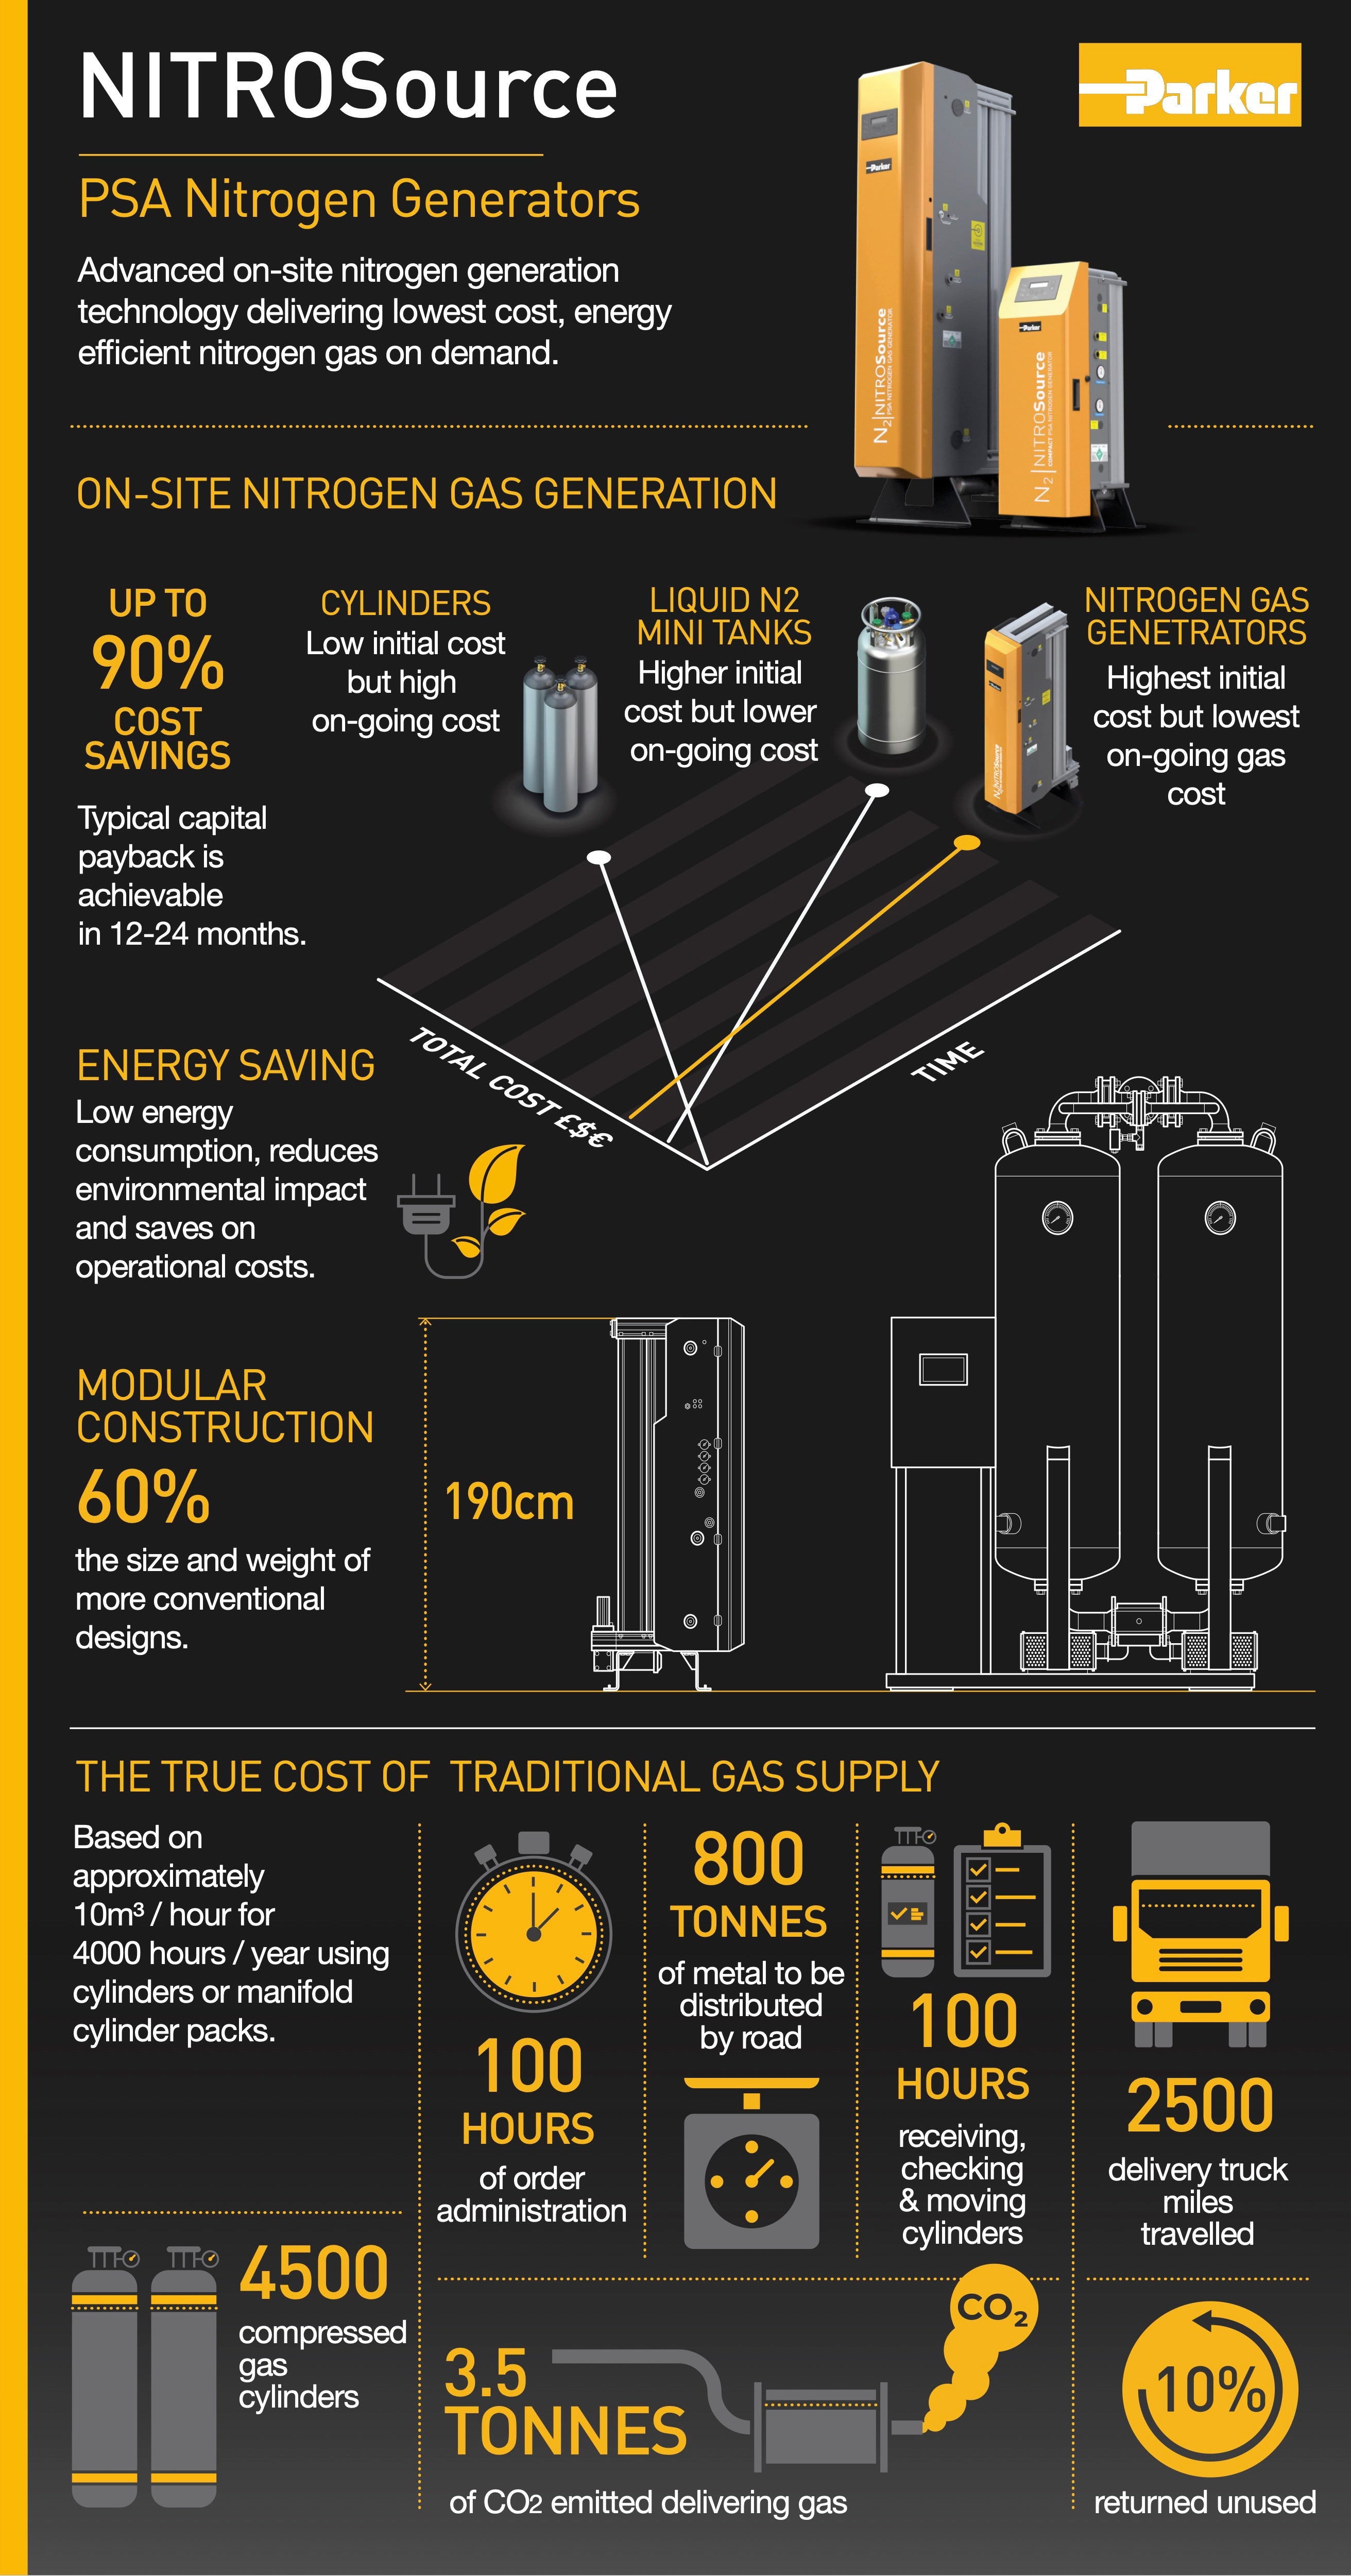 Parker Nitrosource Infographic on Nitrogen Gas Generation